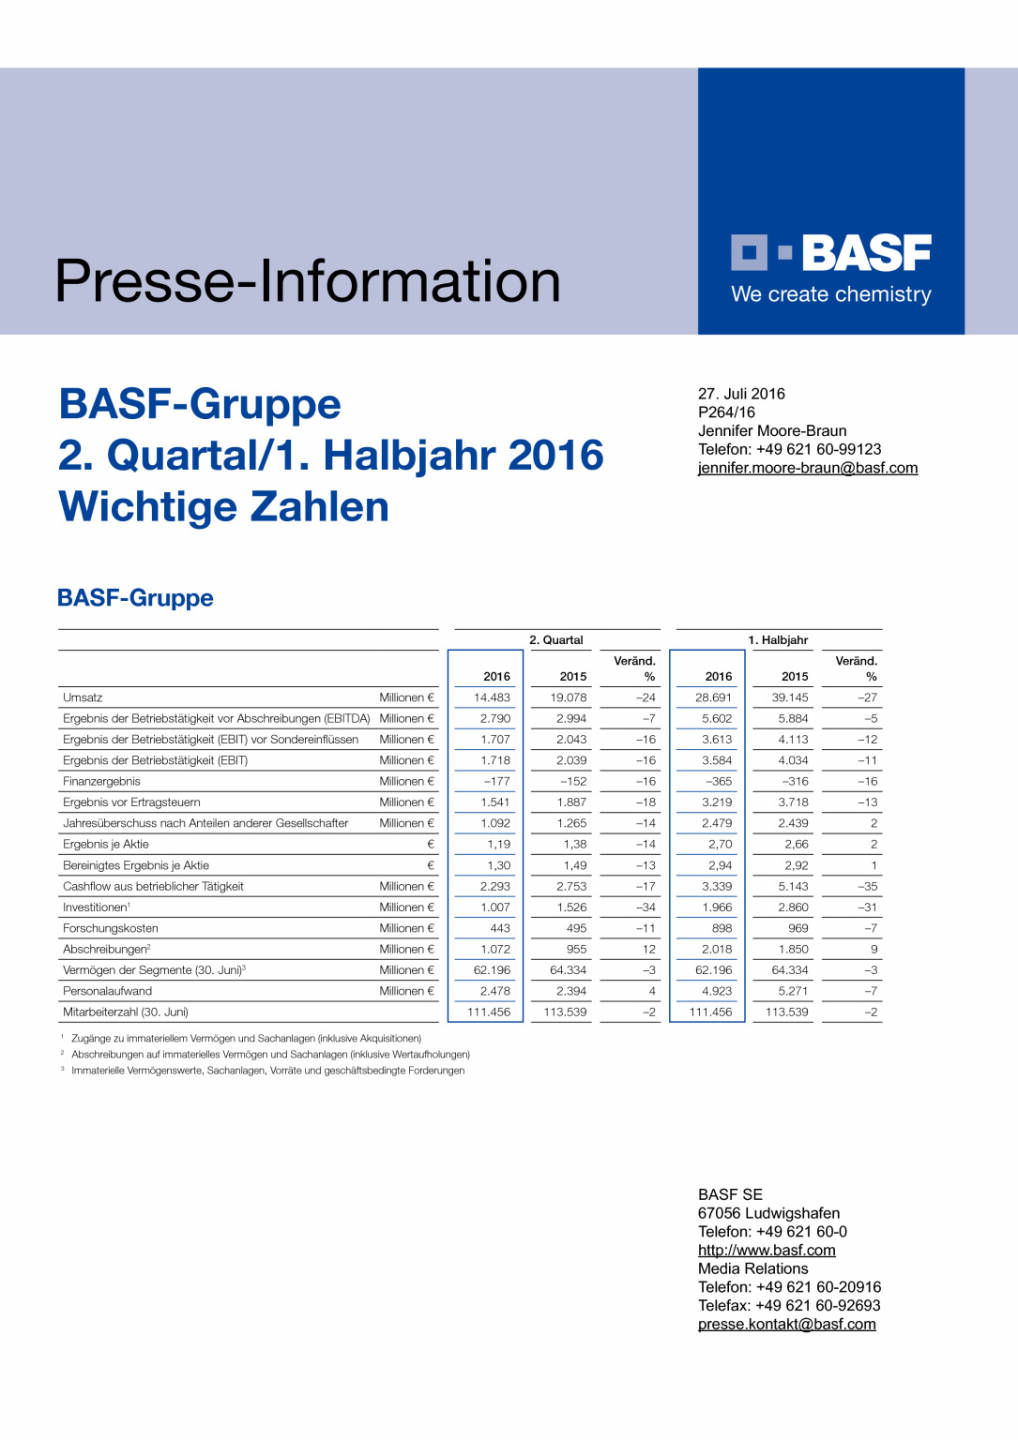 BASF-Gruppe  2. Quartal/1. Halbjahr 2016 Wichtige Zahlen, Seite 1/2, komplettes Dokument unter http://boerse-social.com/static/uploads/file_1493_basf-gruppe_2_quartal1_halbjahr_2016_wichtige_zahlen.pdf